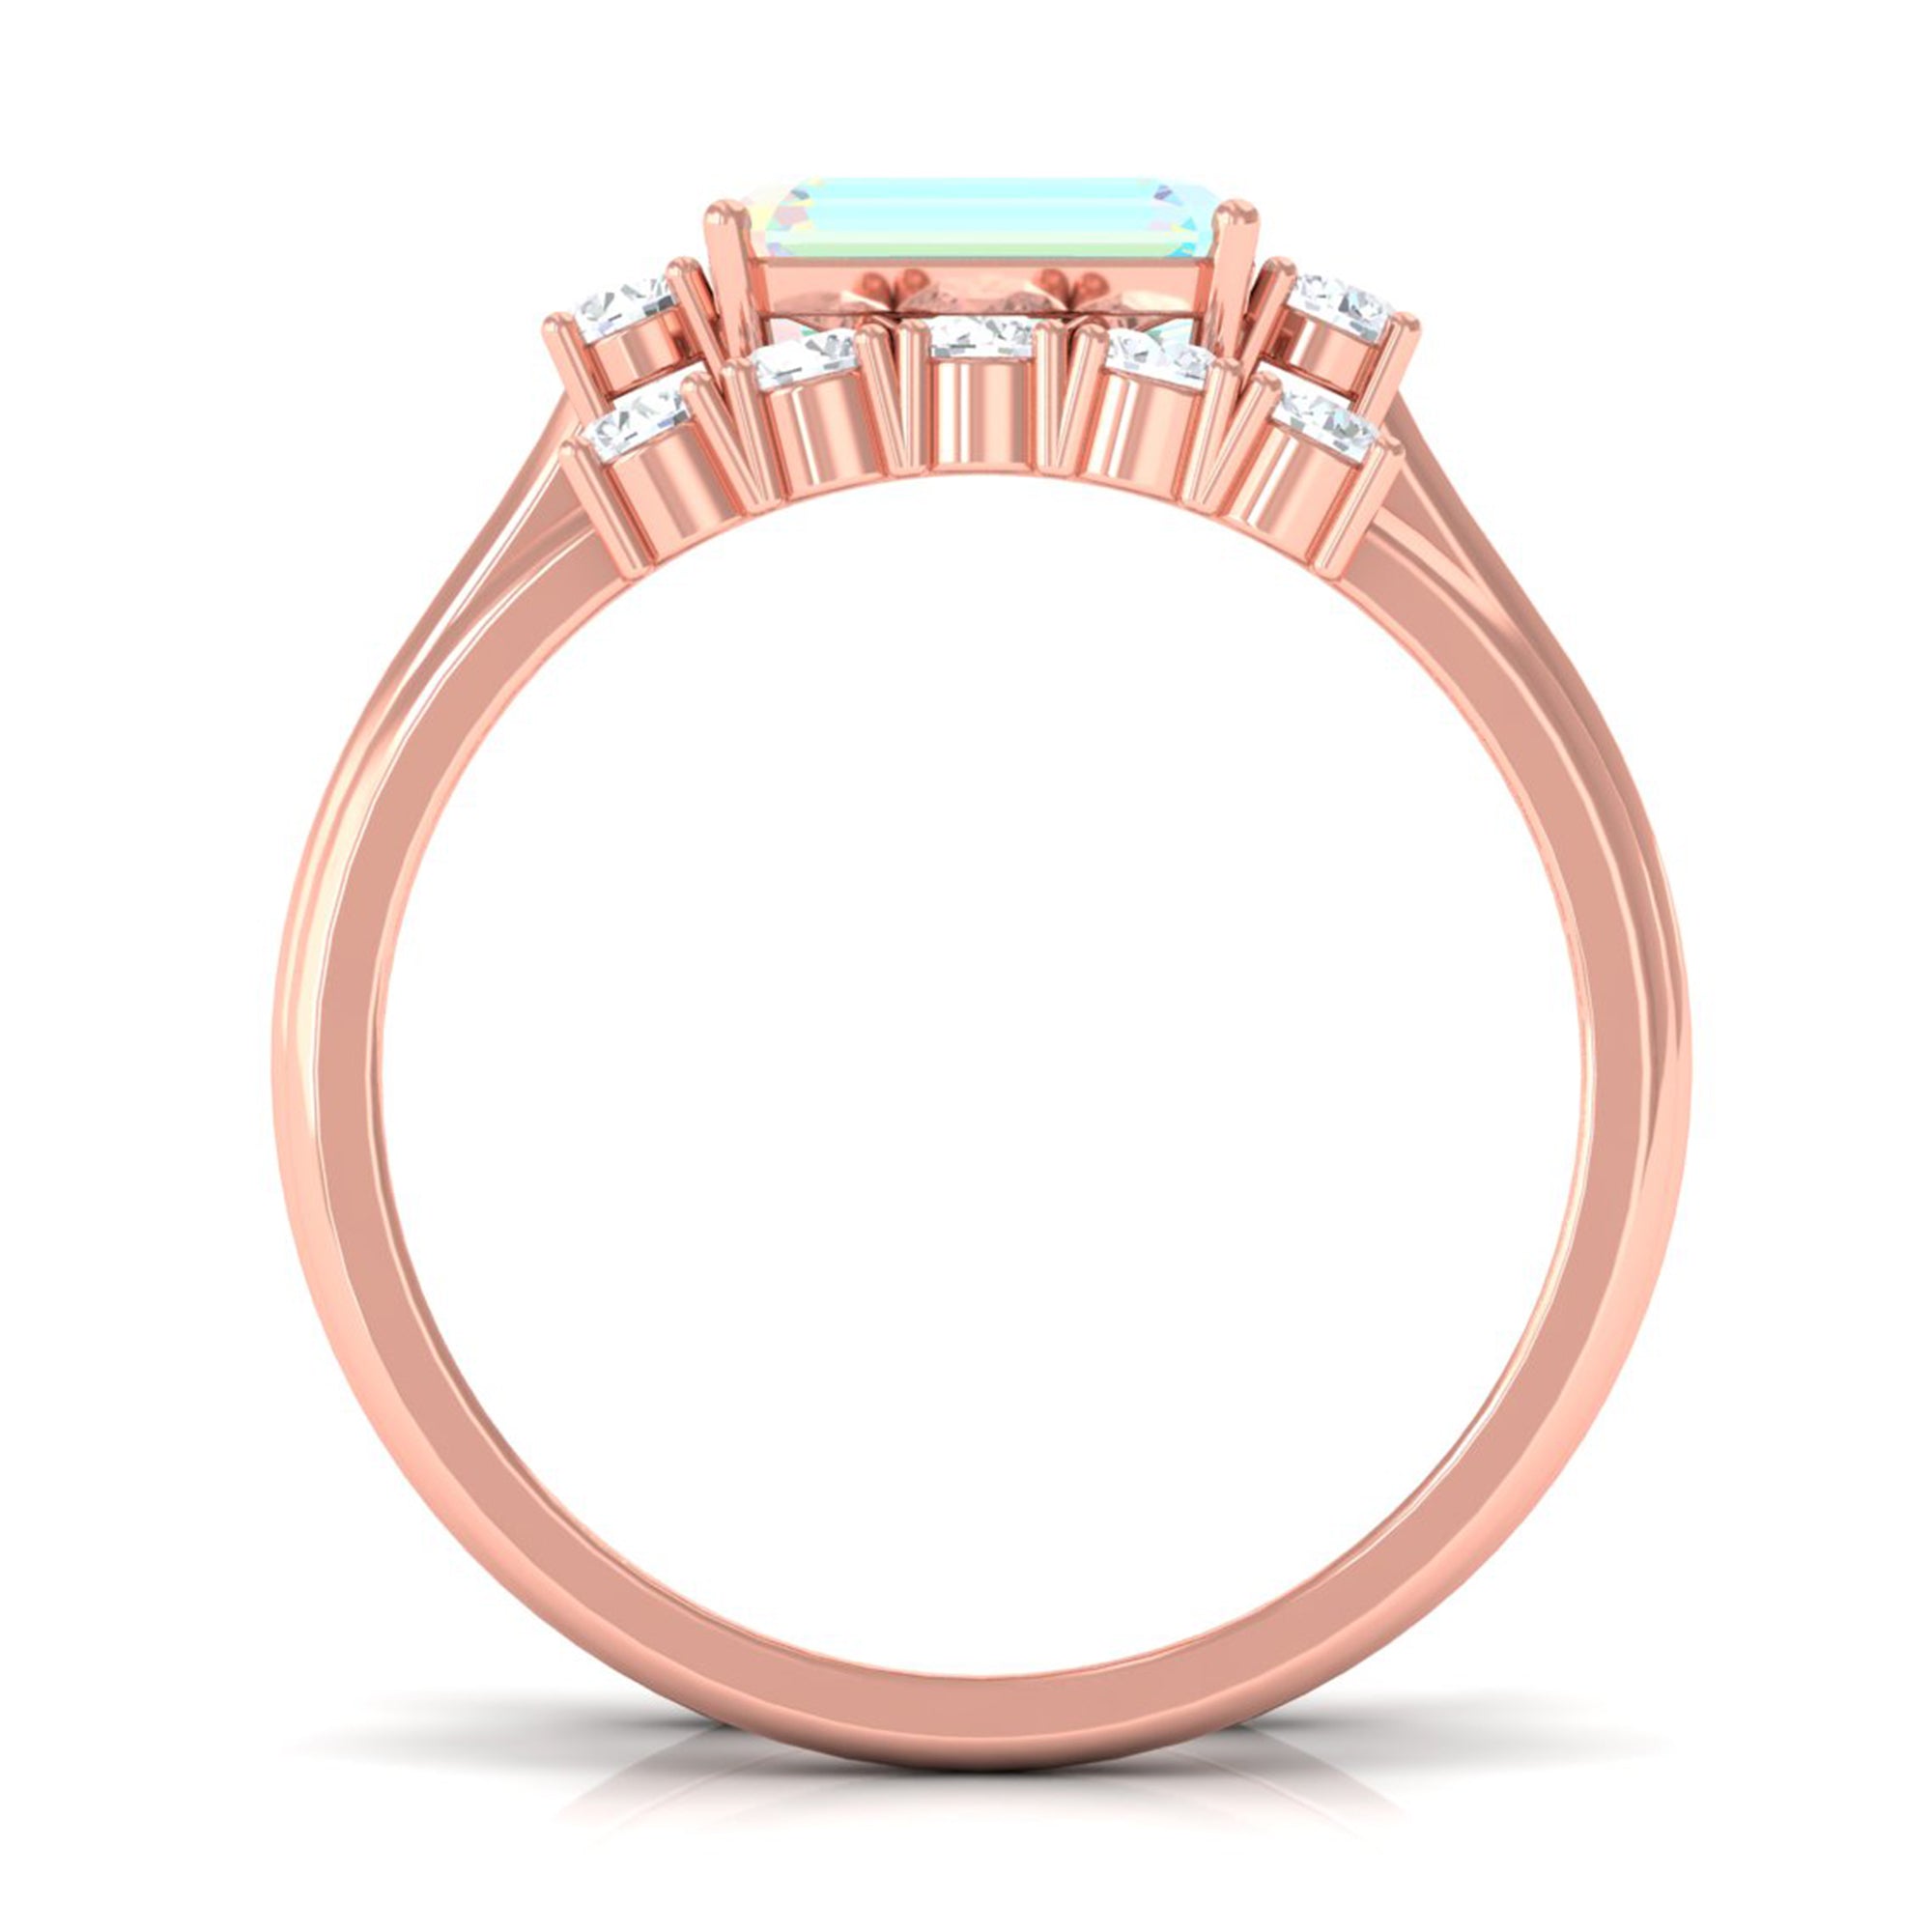 Rosec Jewels-Octagon Cut Ethiopian Opal Contemporary Wedding Ring Set with Diamond